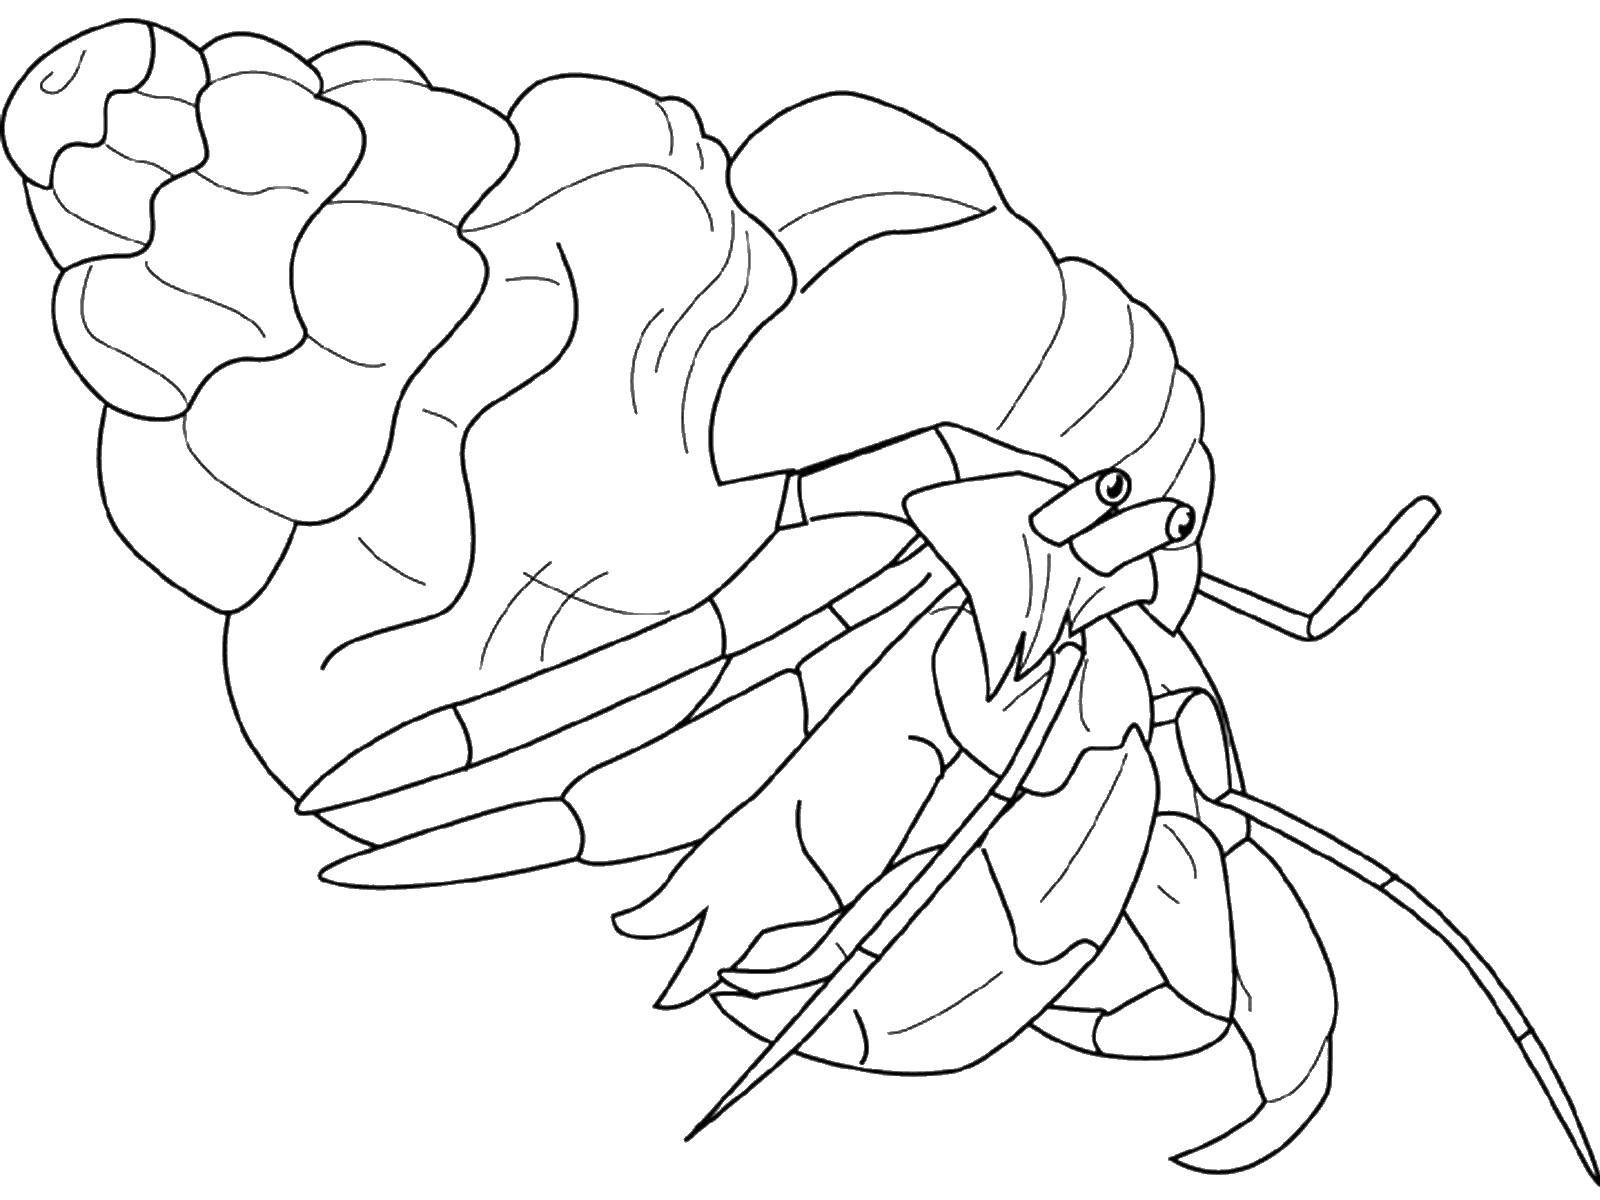 Coloring Crab. Category marine. Tags:  crab.